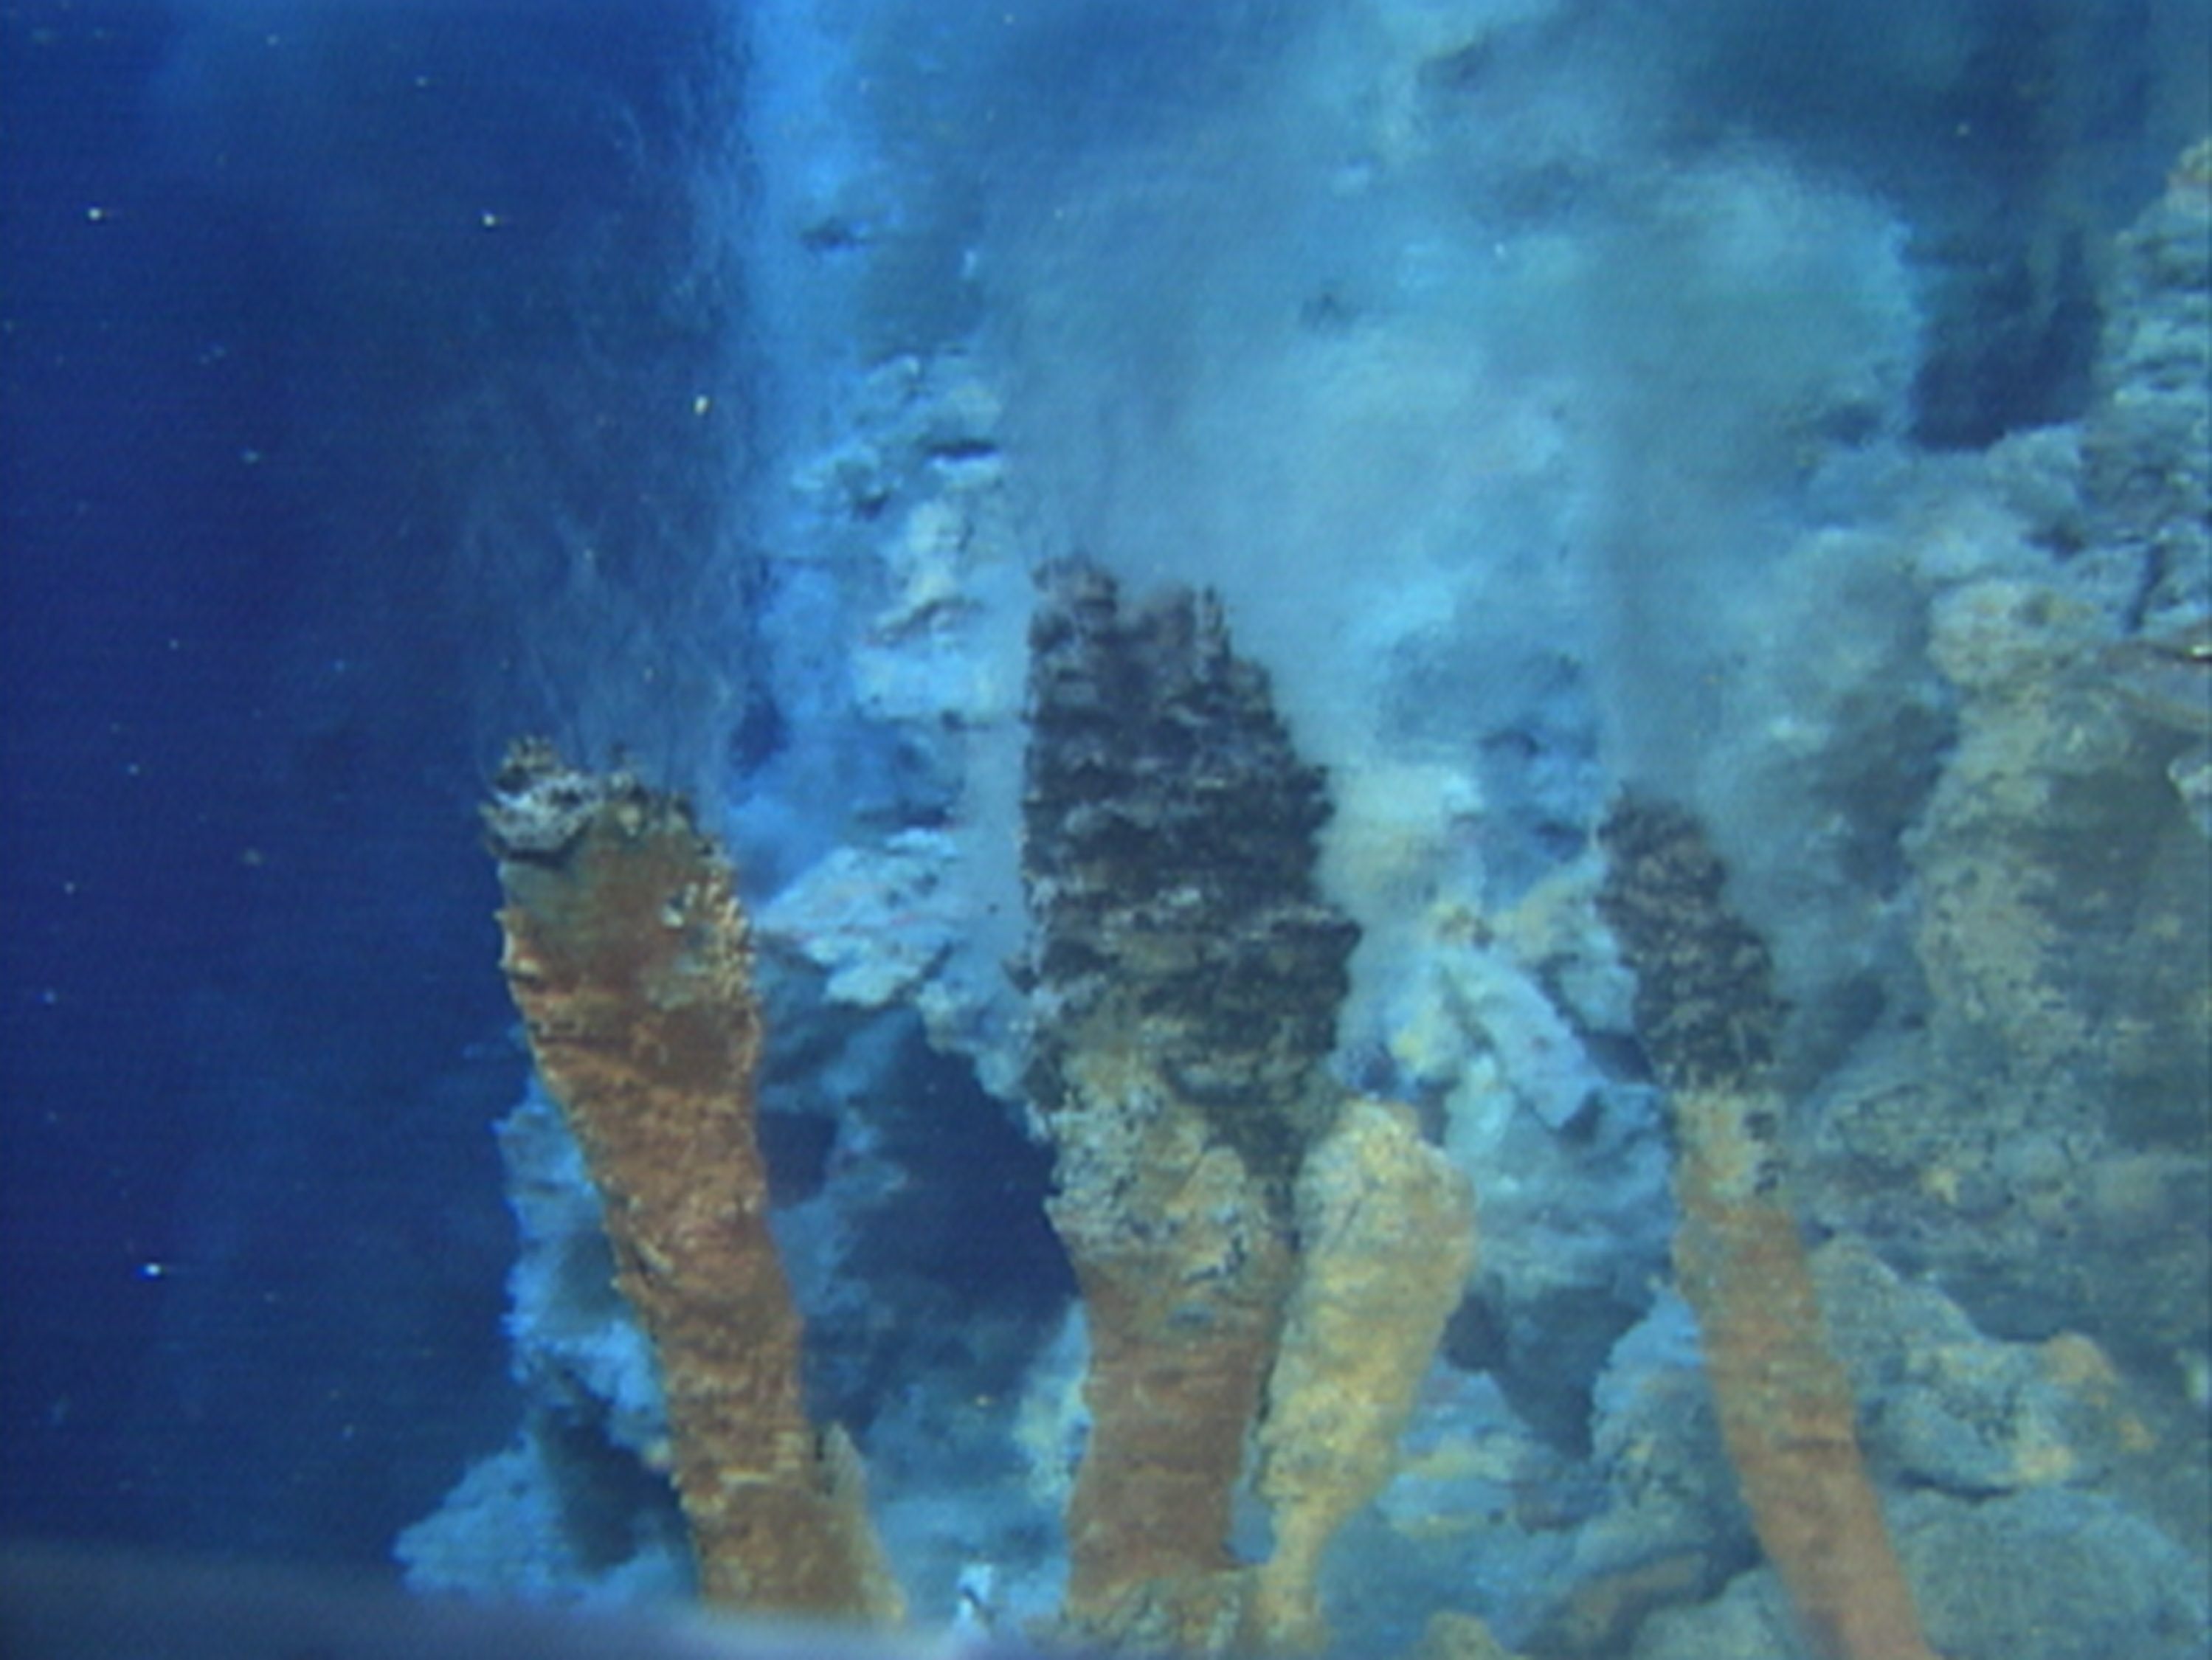 Deep-Sea Sponge Skeletons Could Inspire Better Bridges - Scientific American